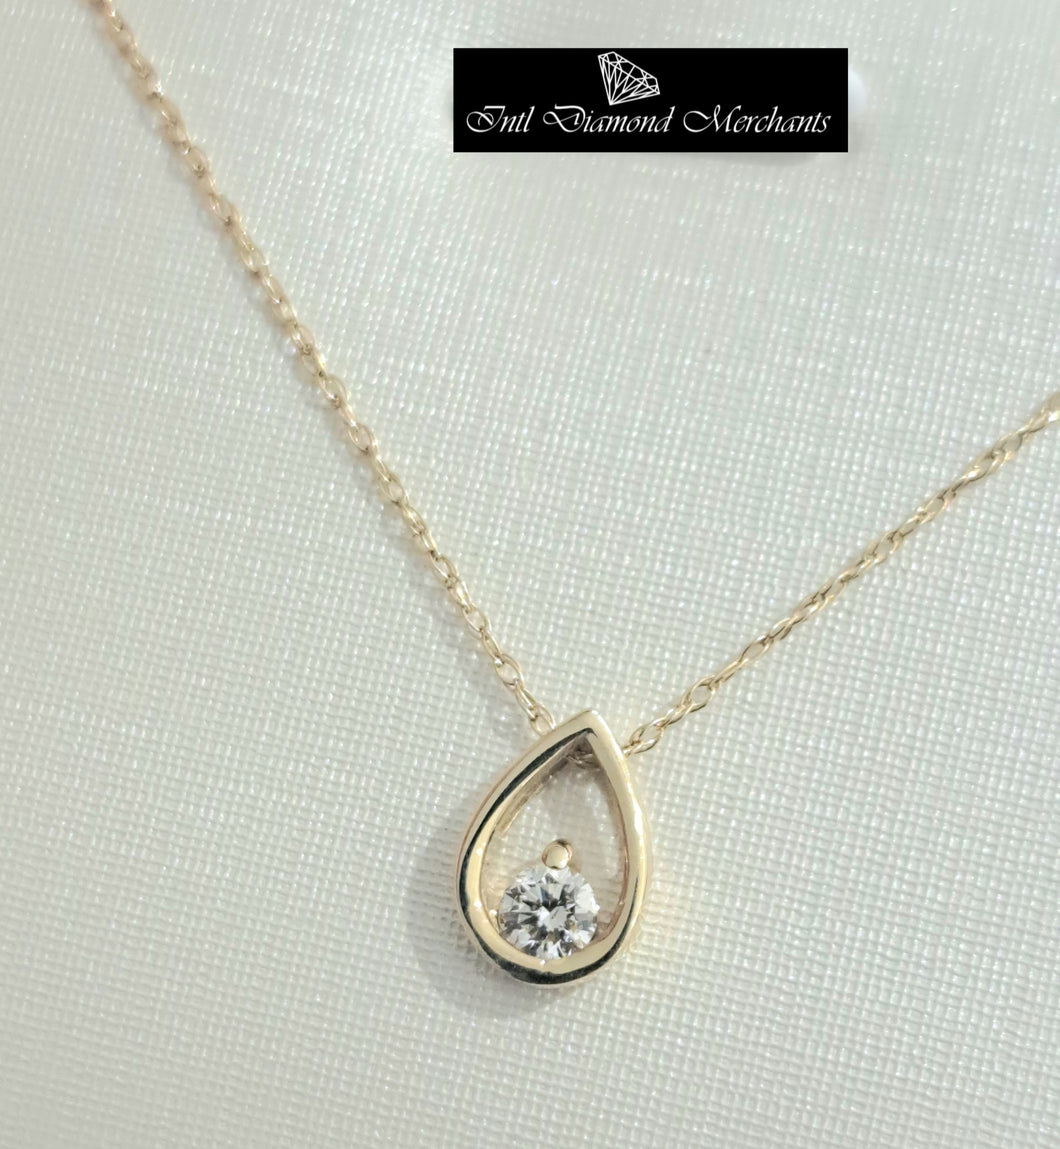 0.10ct Round Brilliant Cut Diamond | Designer Solitaire Pendant with Chain | 10kt Yellow Gold